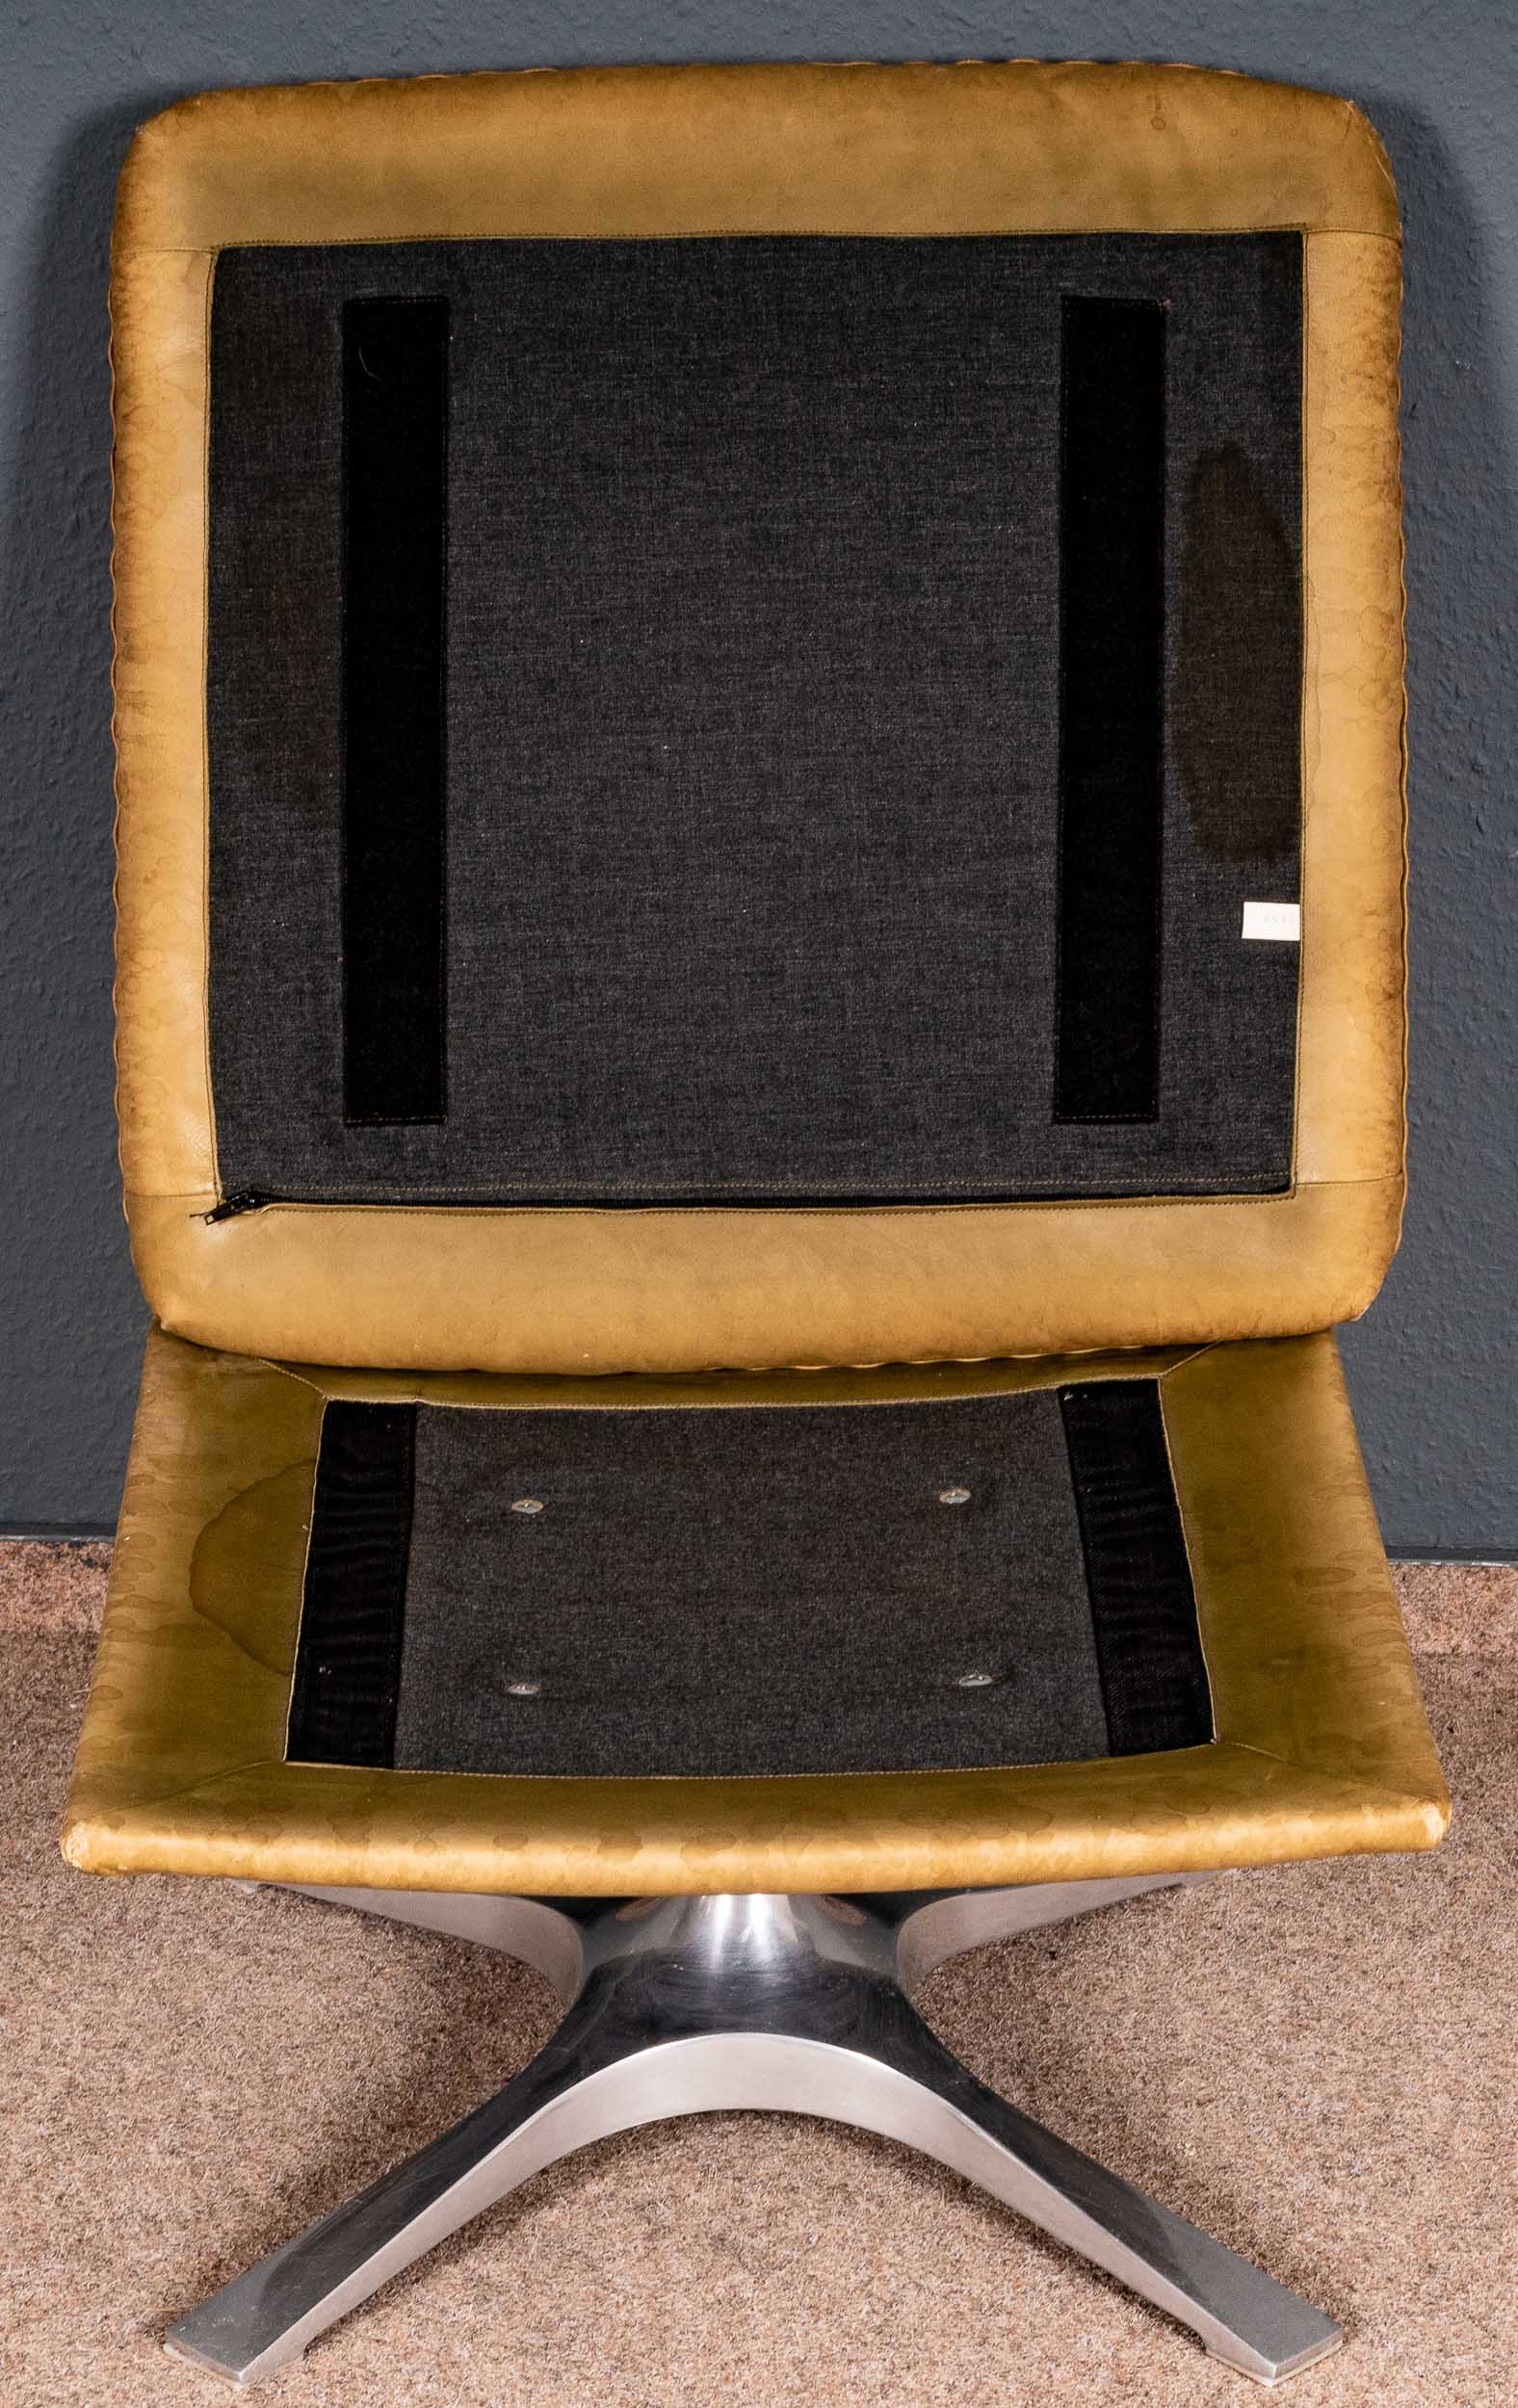 Fußhocker eines Lounge-Chairs, sandfarbenes helles Leder, 4passiger Fuß aus poliertem Aluminiumguss - Image 5 of 7